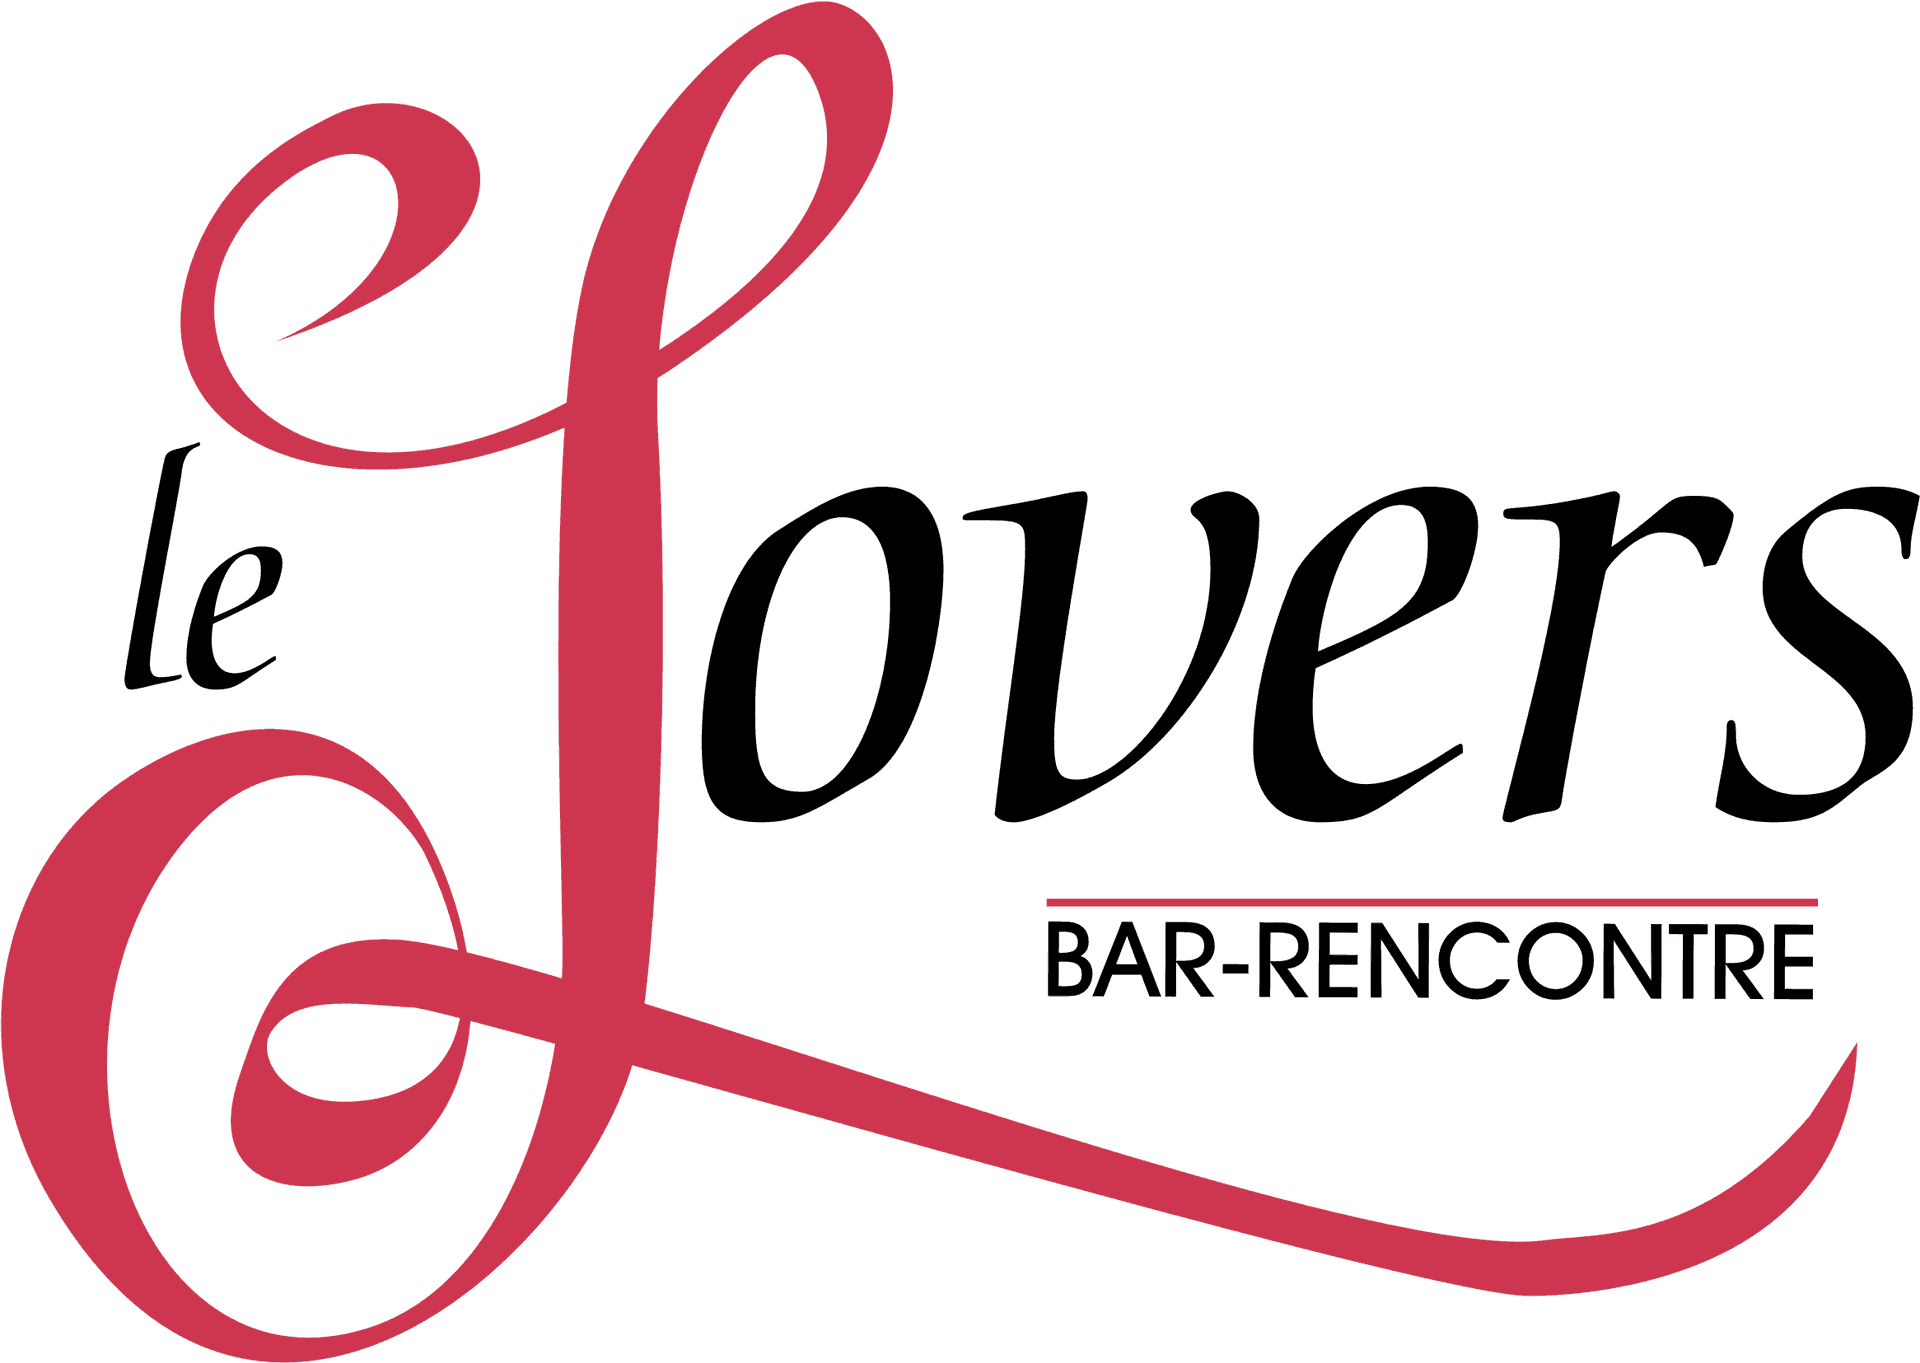 Le Lovers Bar Rencontre Logo PNG